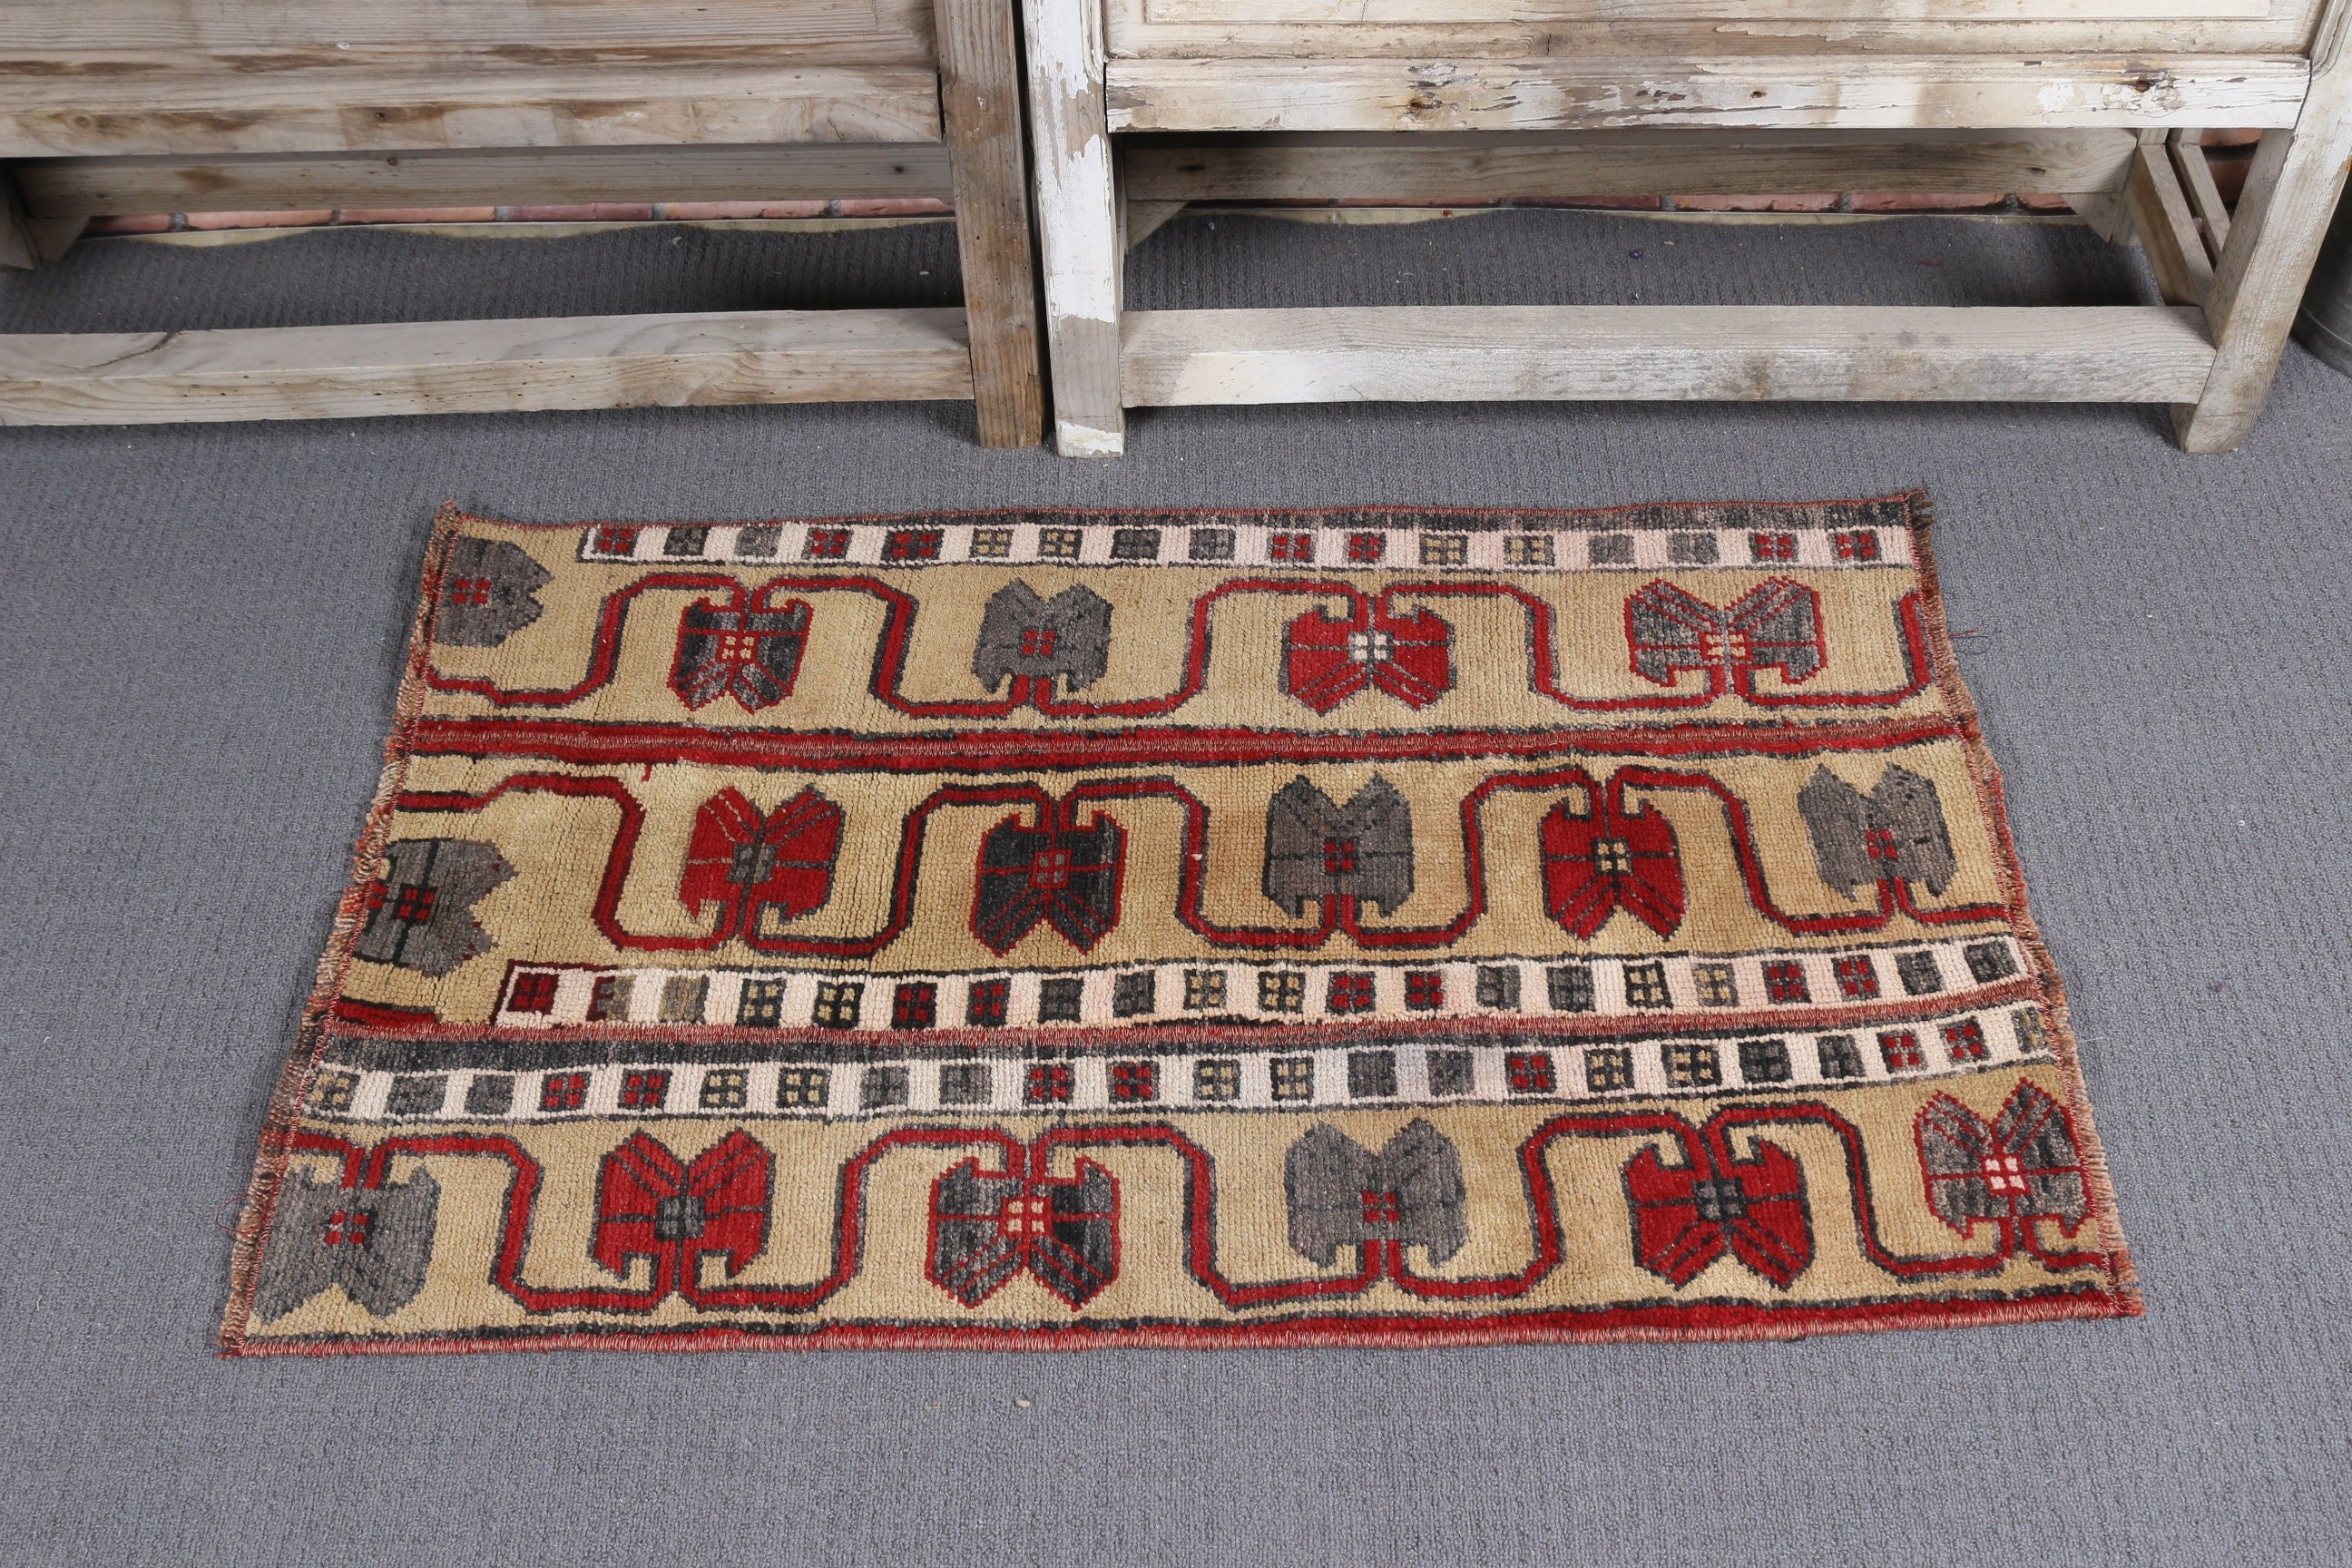 Ethnic Rug, Vintage Rugs, Bedroom Rug, Door Mat Rug, Brown Anatolian Rug, Wall Hanging Rug, Turkish Rugs, 2x3.1 ft Small Rugs